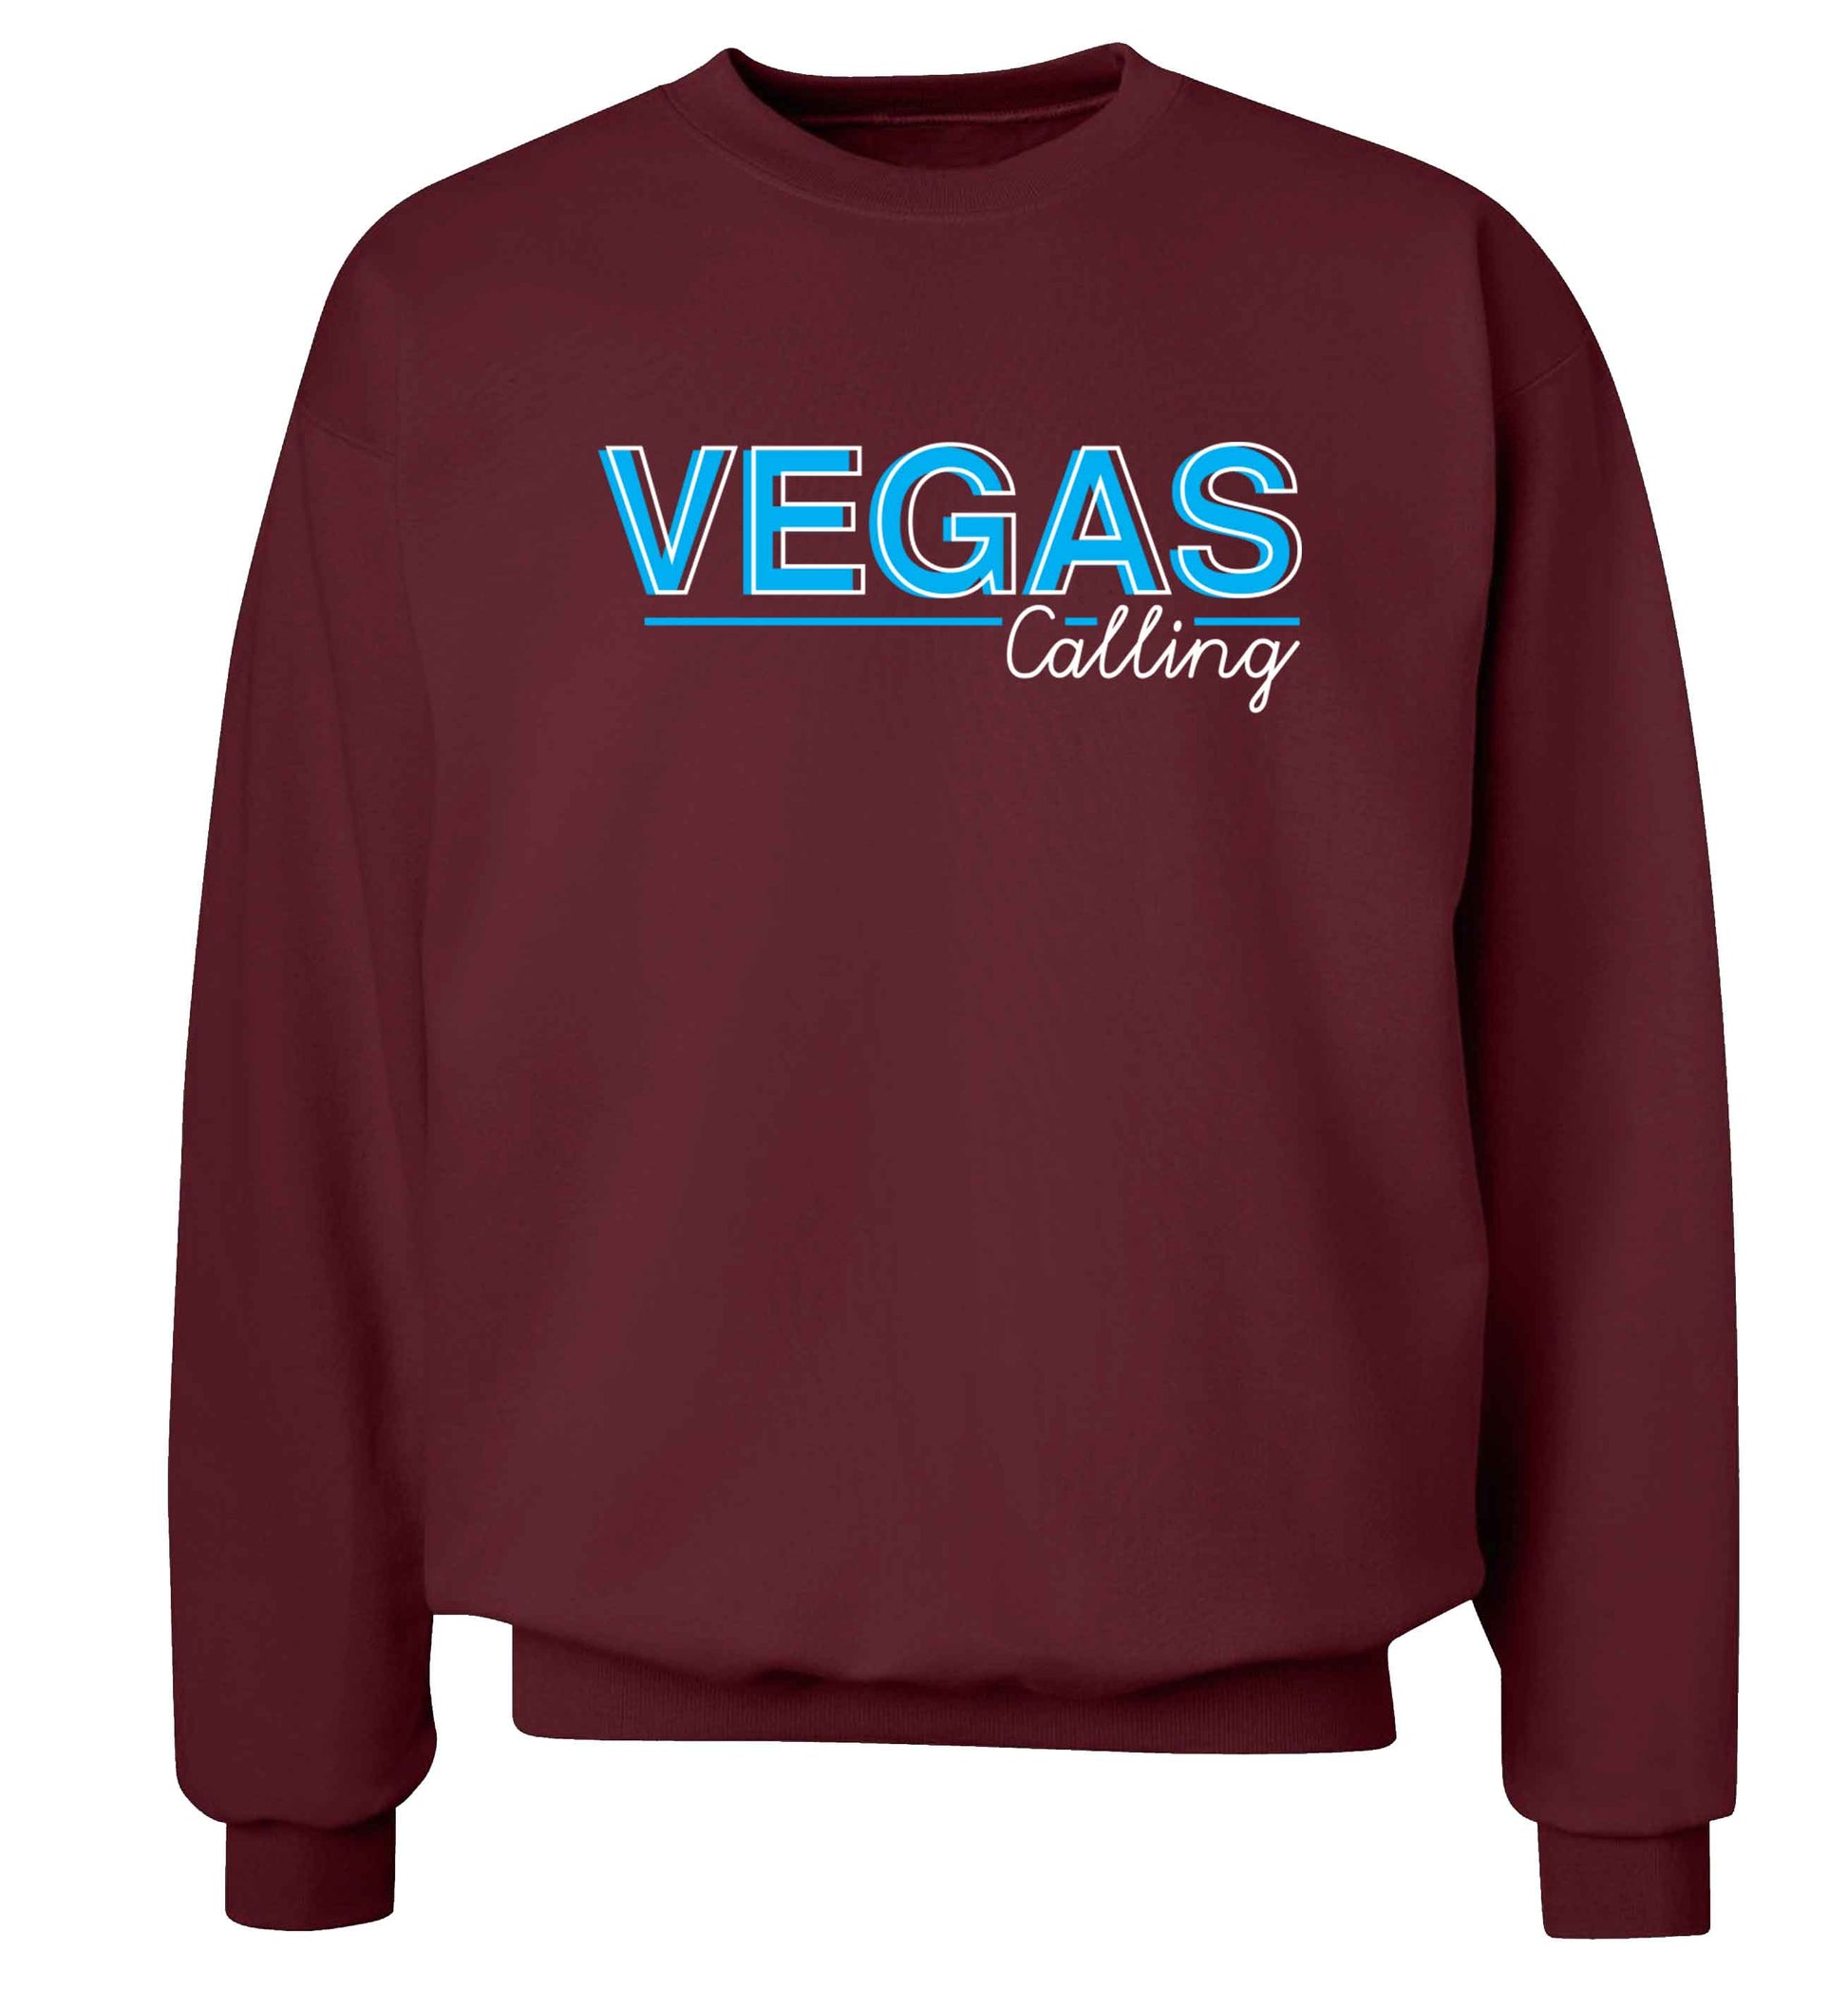 Vegas calling Adult's unisex maroon Sweater 2XL